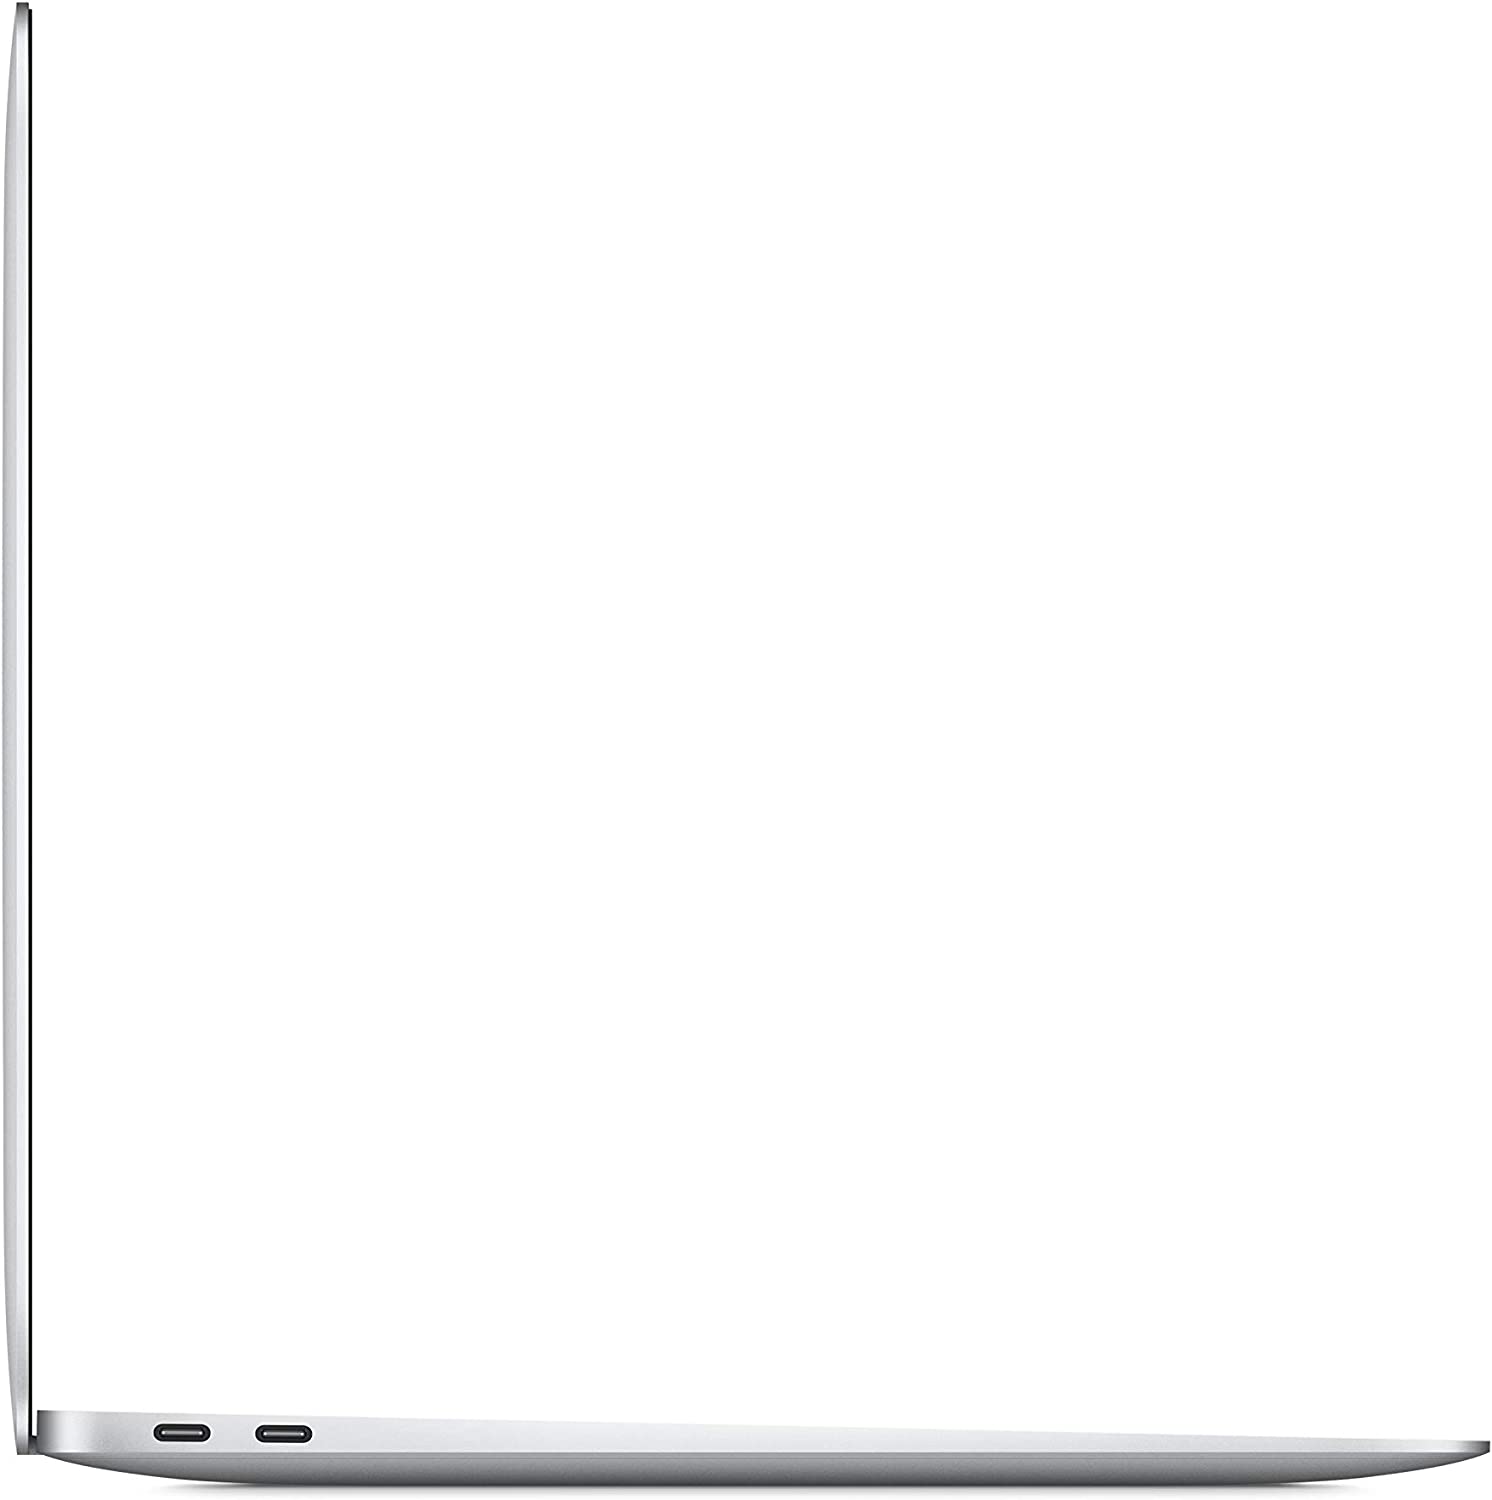 Apple MacBook Air with Apple (MGN63B/A) M1 Chip 2020 (13-inch, 8GB RAM, 256GB SSD Storage) - Space Gray (Renewed)